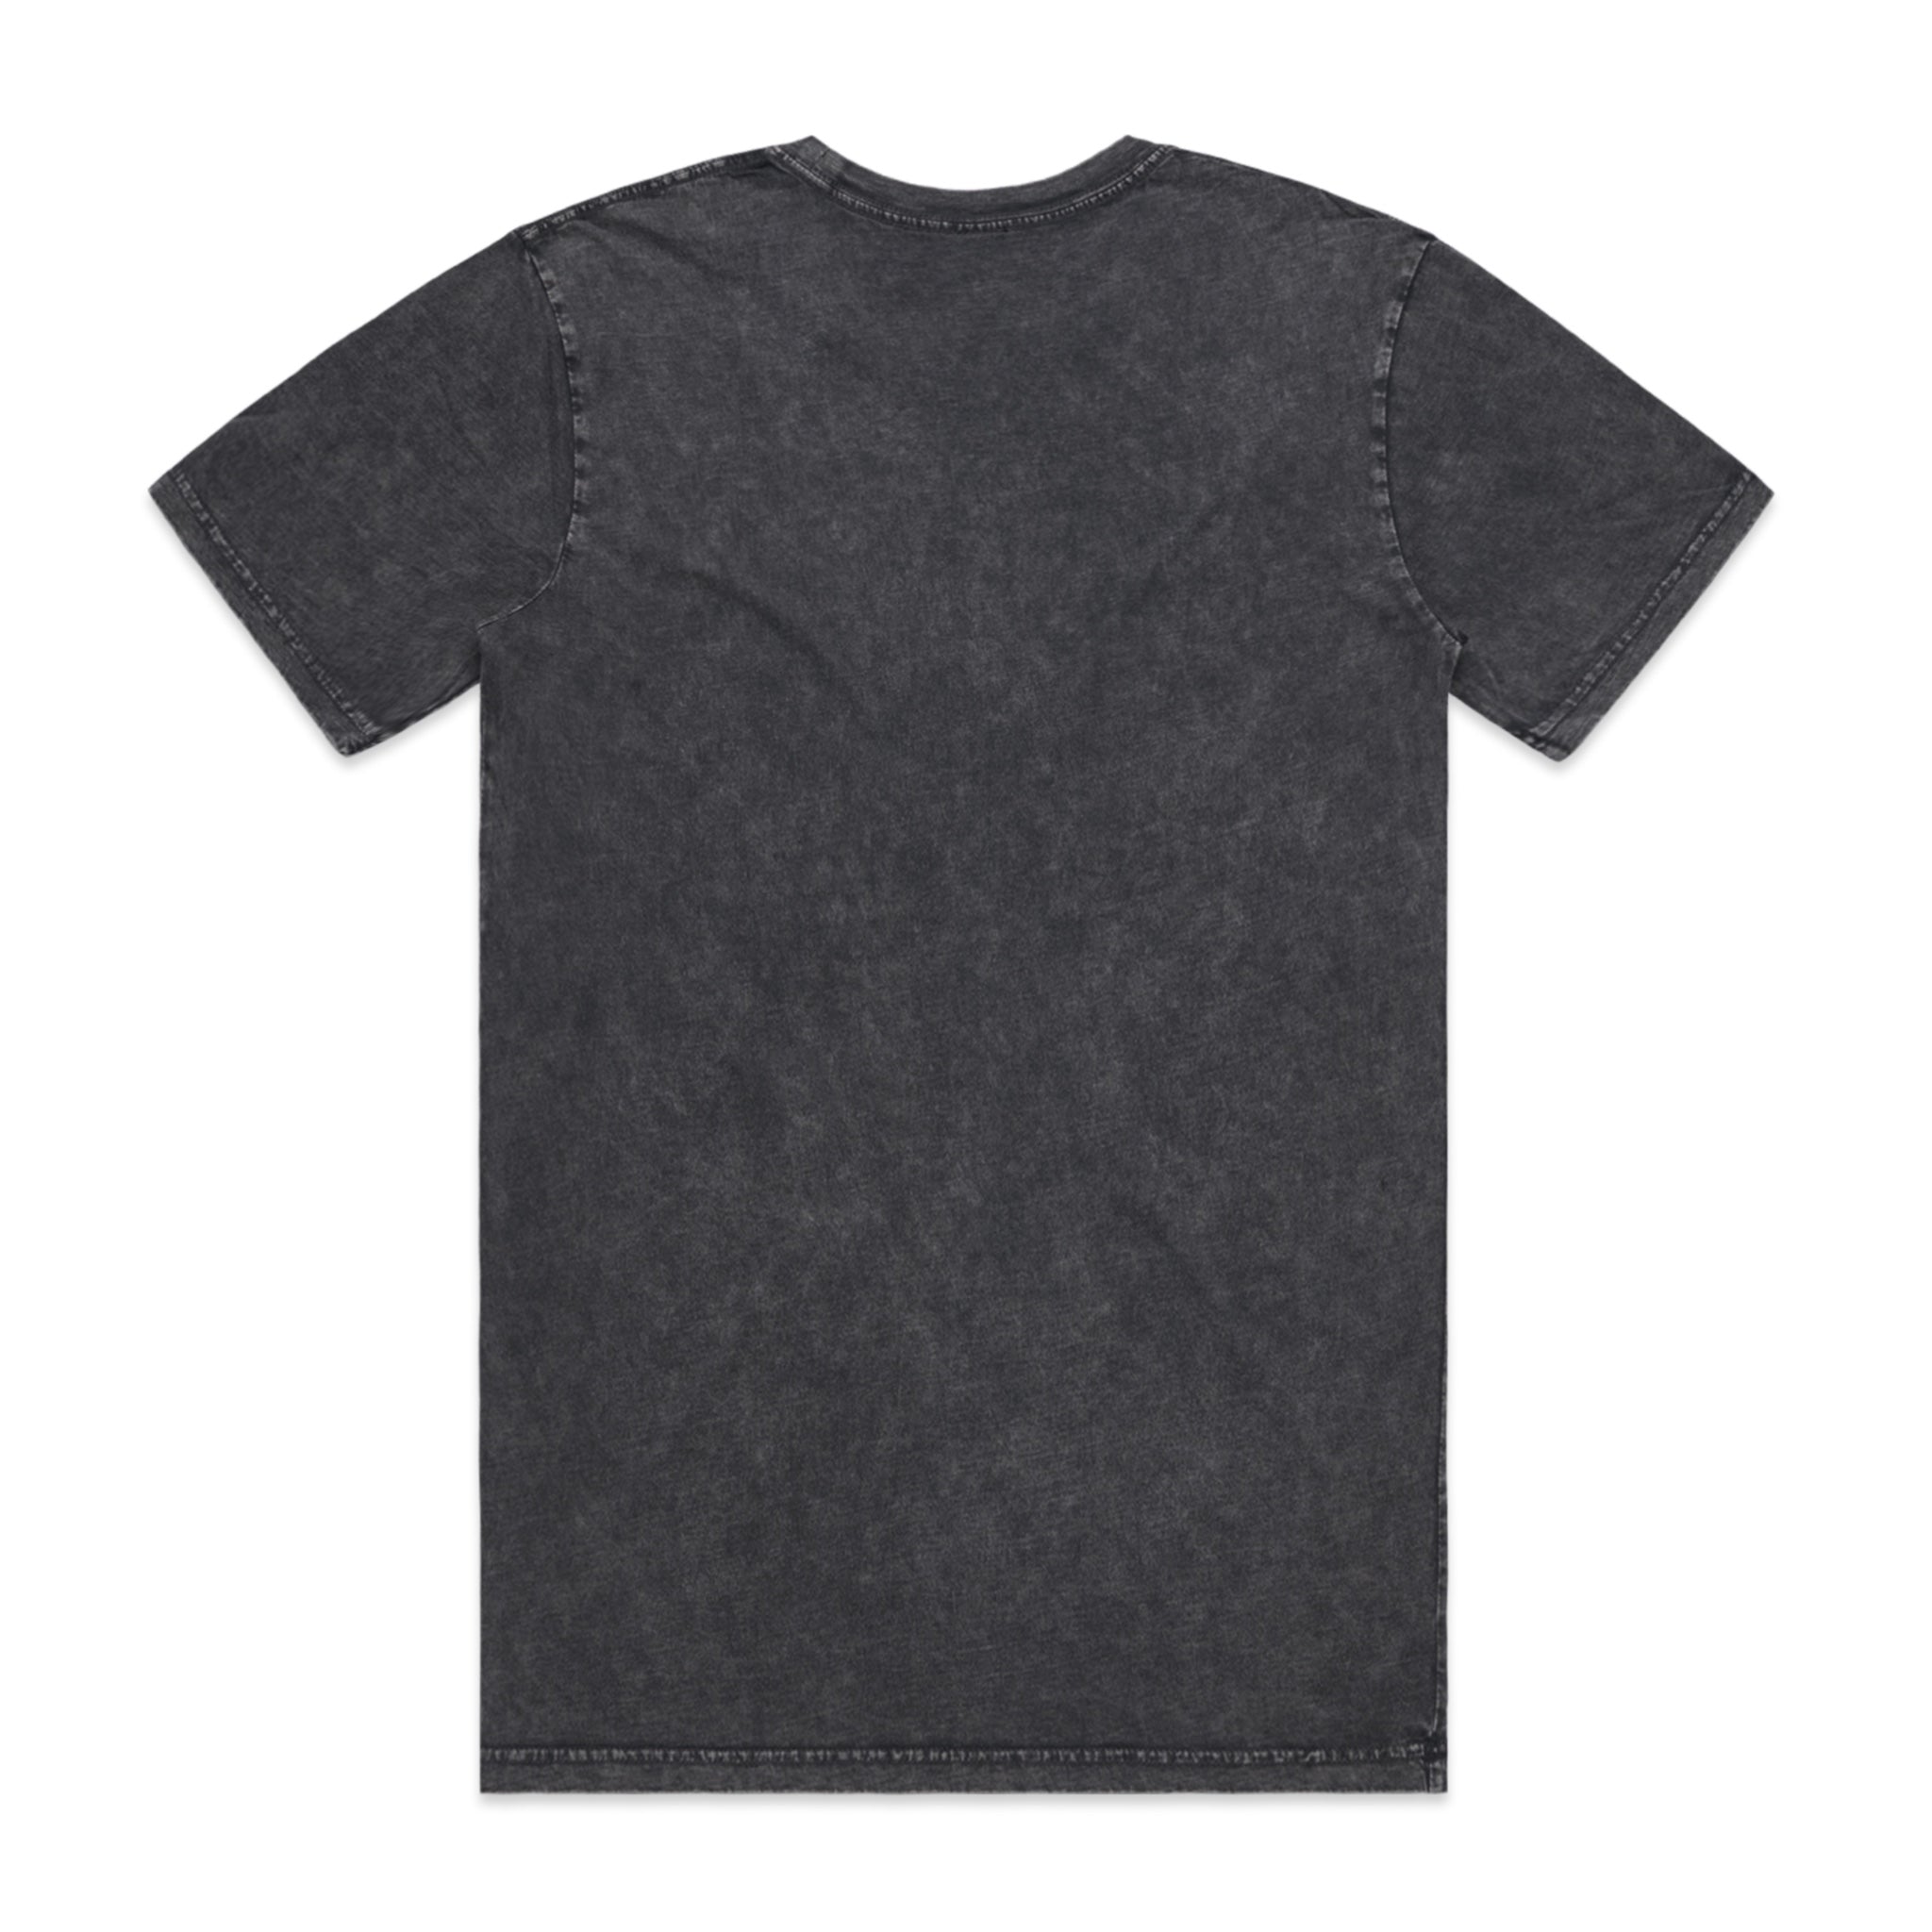 Hoy Uptown T-shirt - Black / Sea Salt